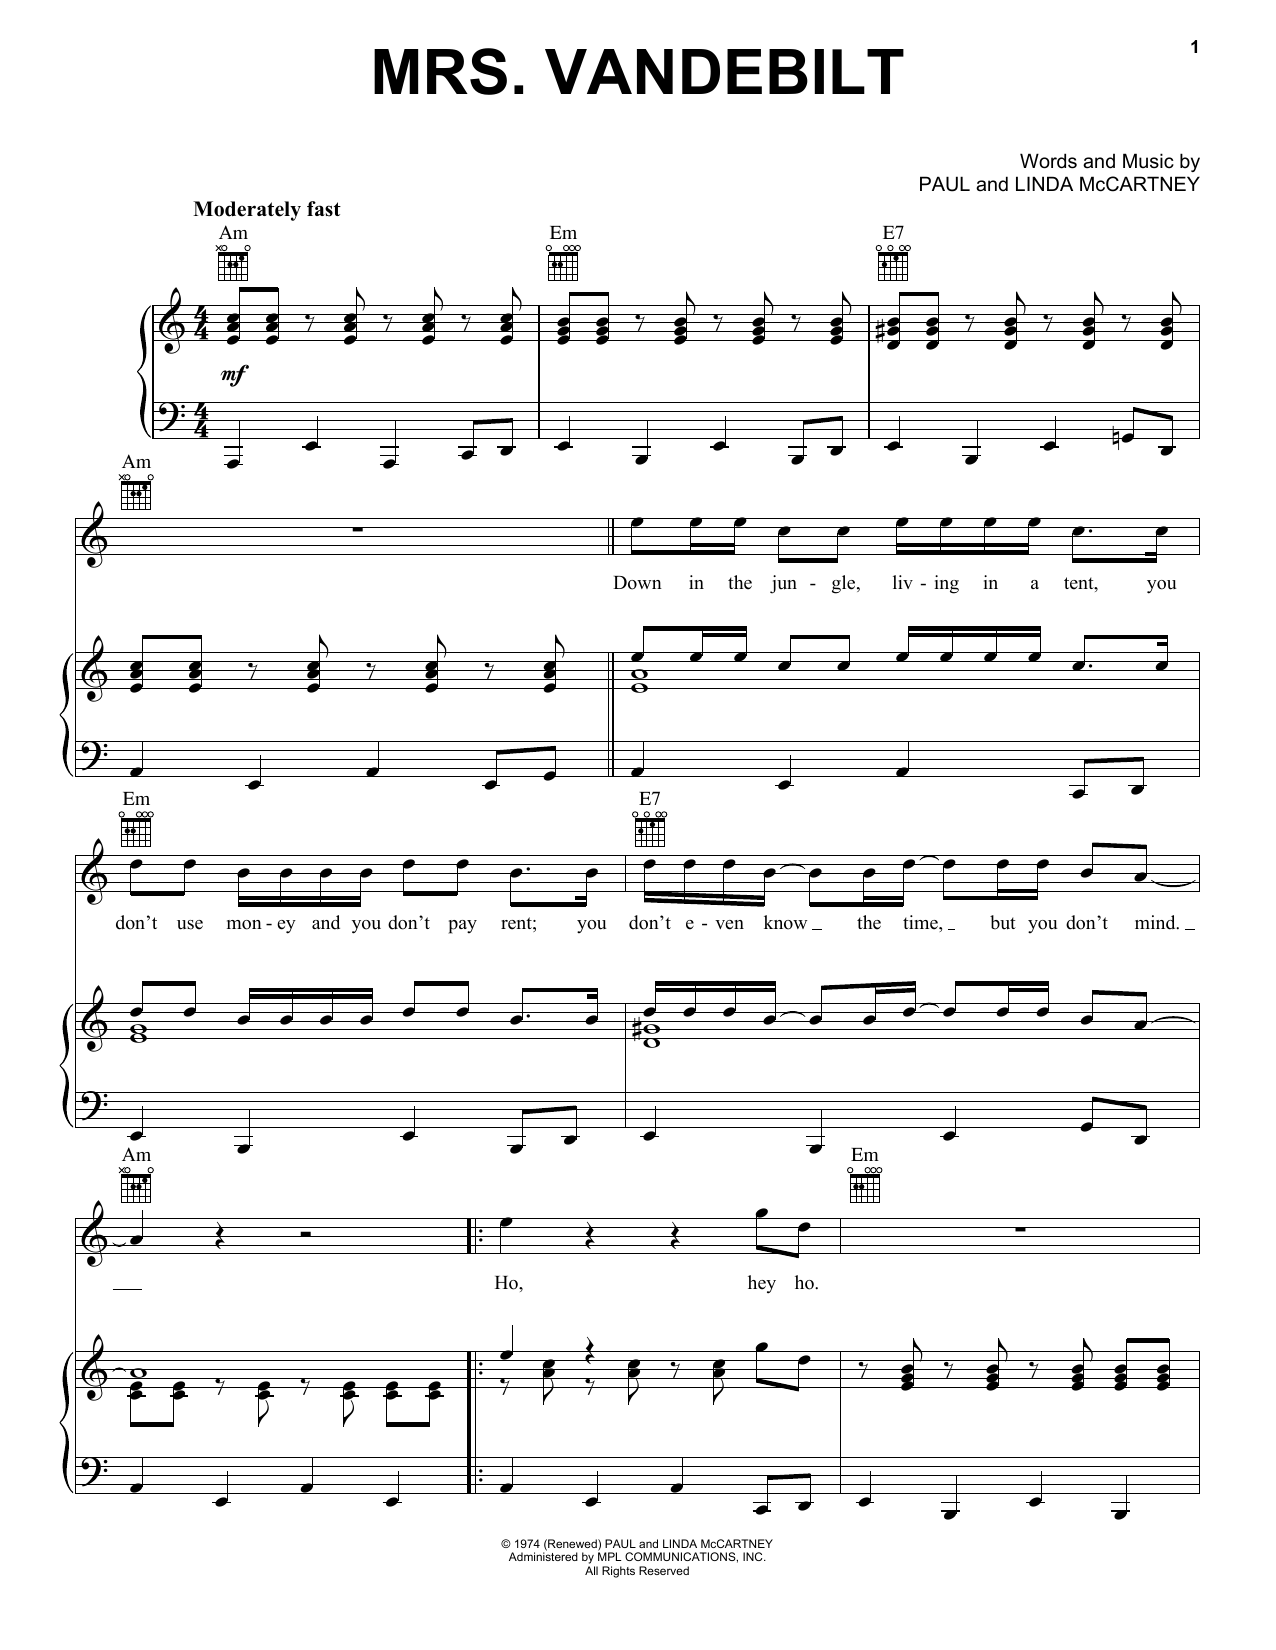 Paul McCartney Mrs. Vandebilt Sheet Music Notes & Chords for Easy Piano - Download or Print PDF